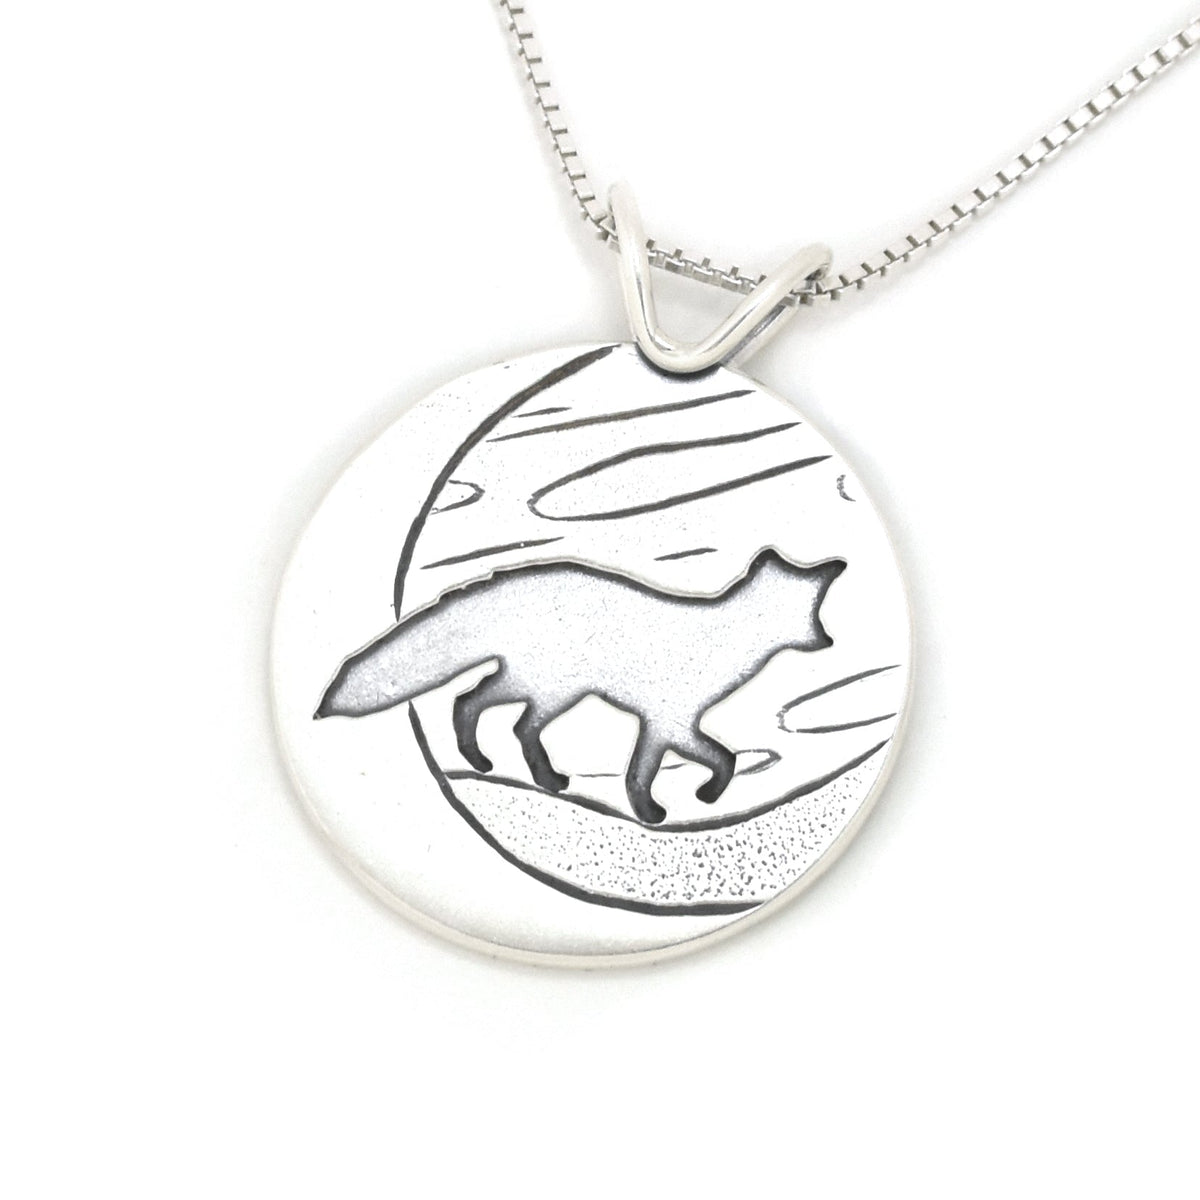 Silver Fox Pendant - Silver Pendant   6990 - handmade by Beth Millner Jewelry